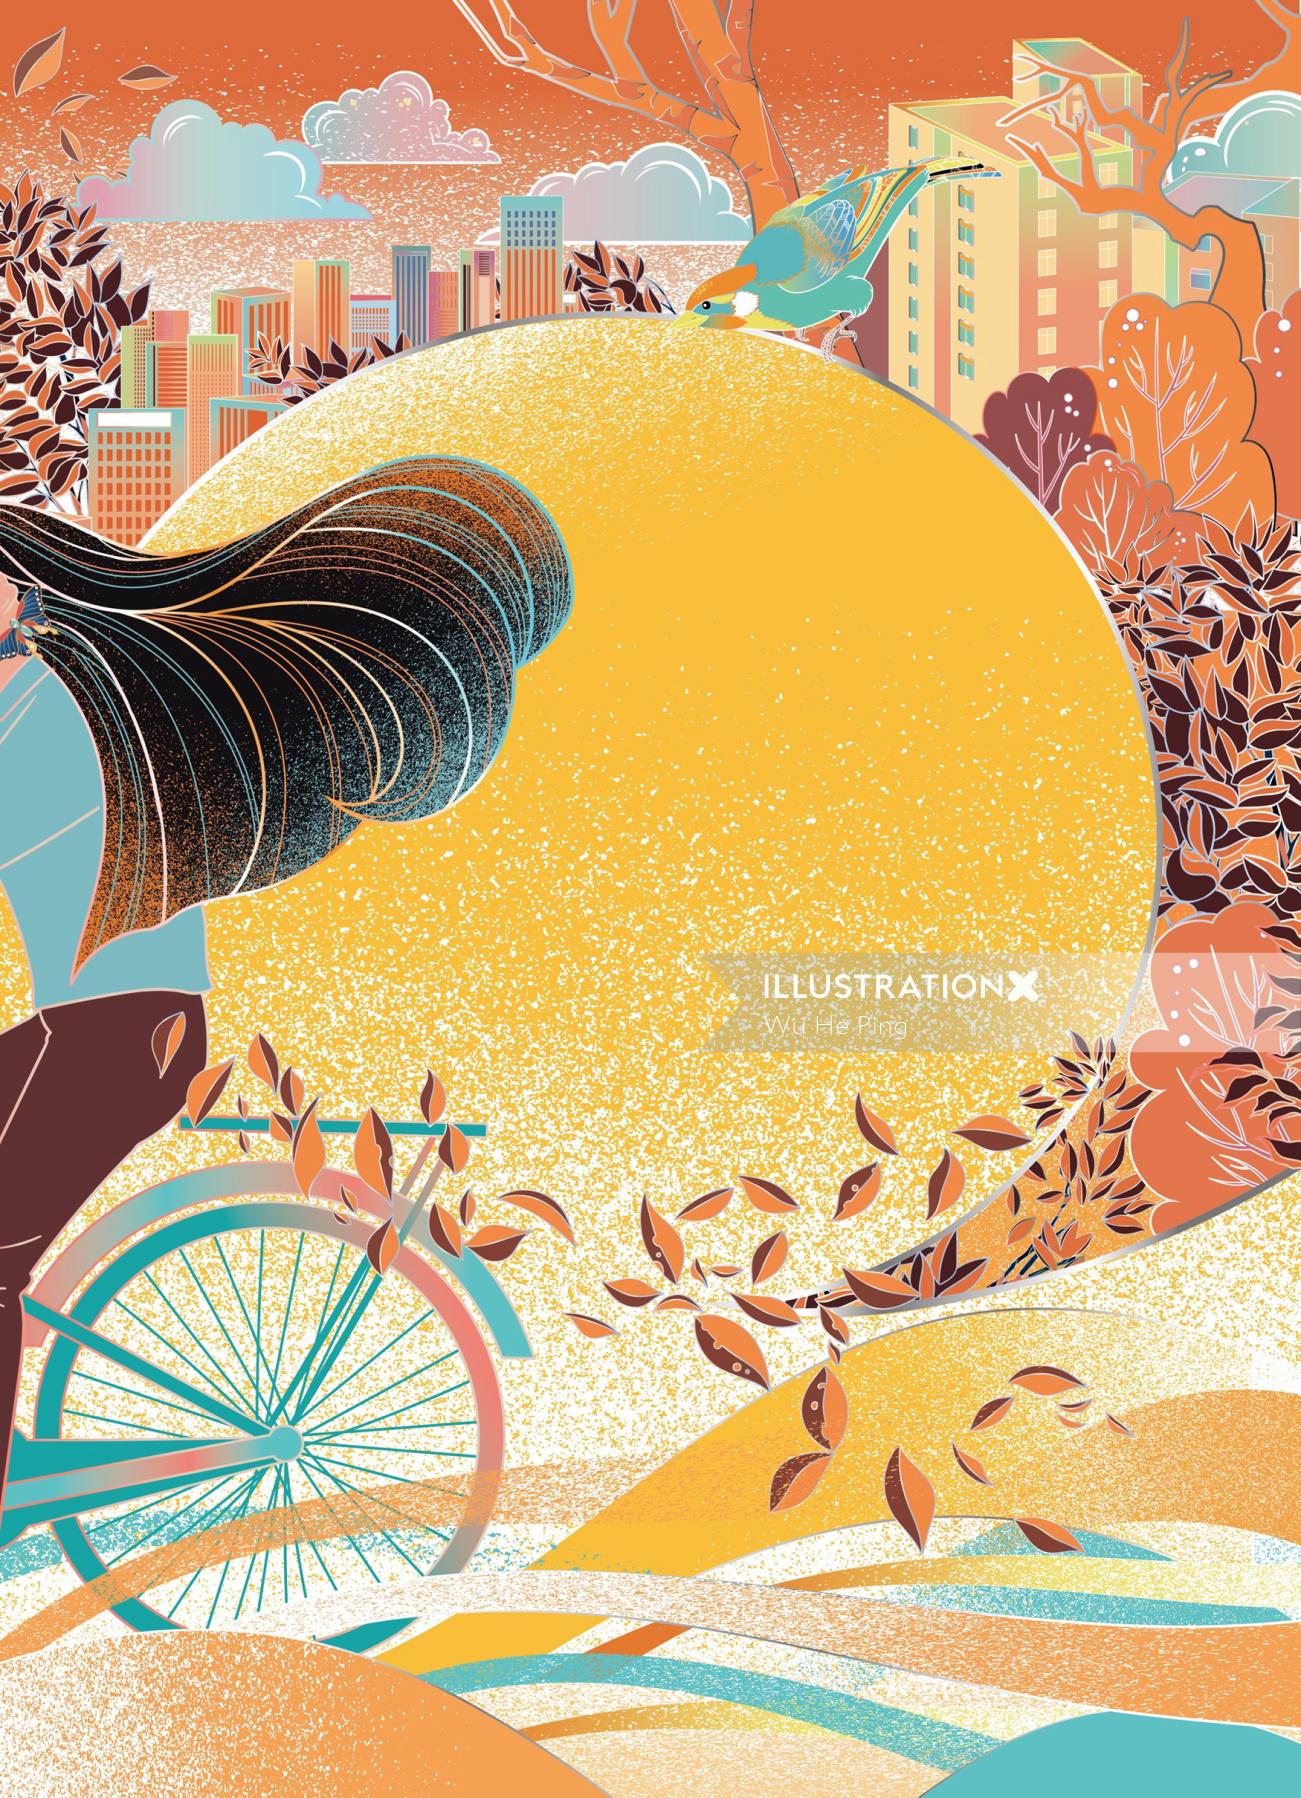 Woman on bicycle decorative illustration